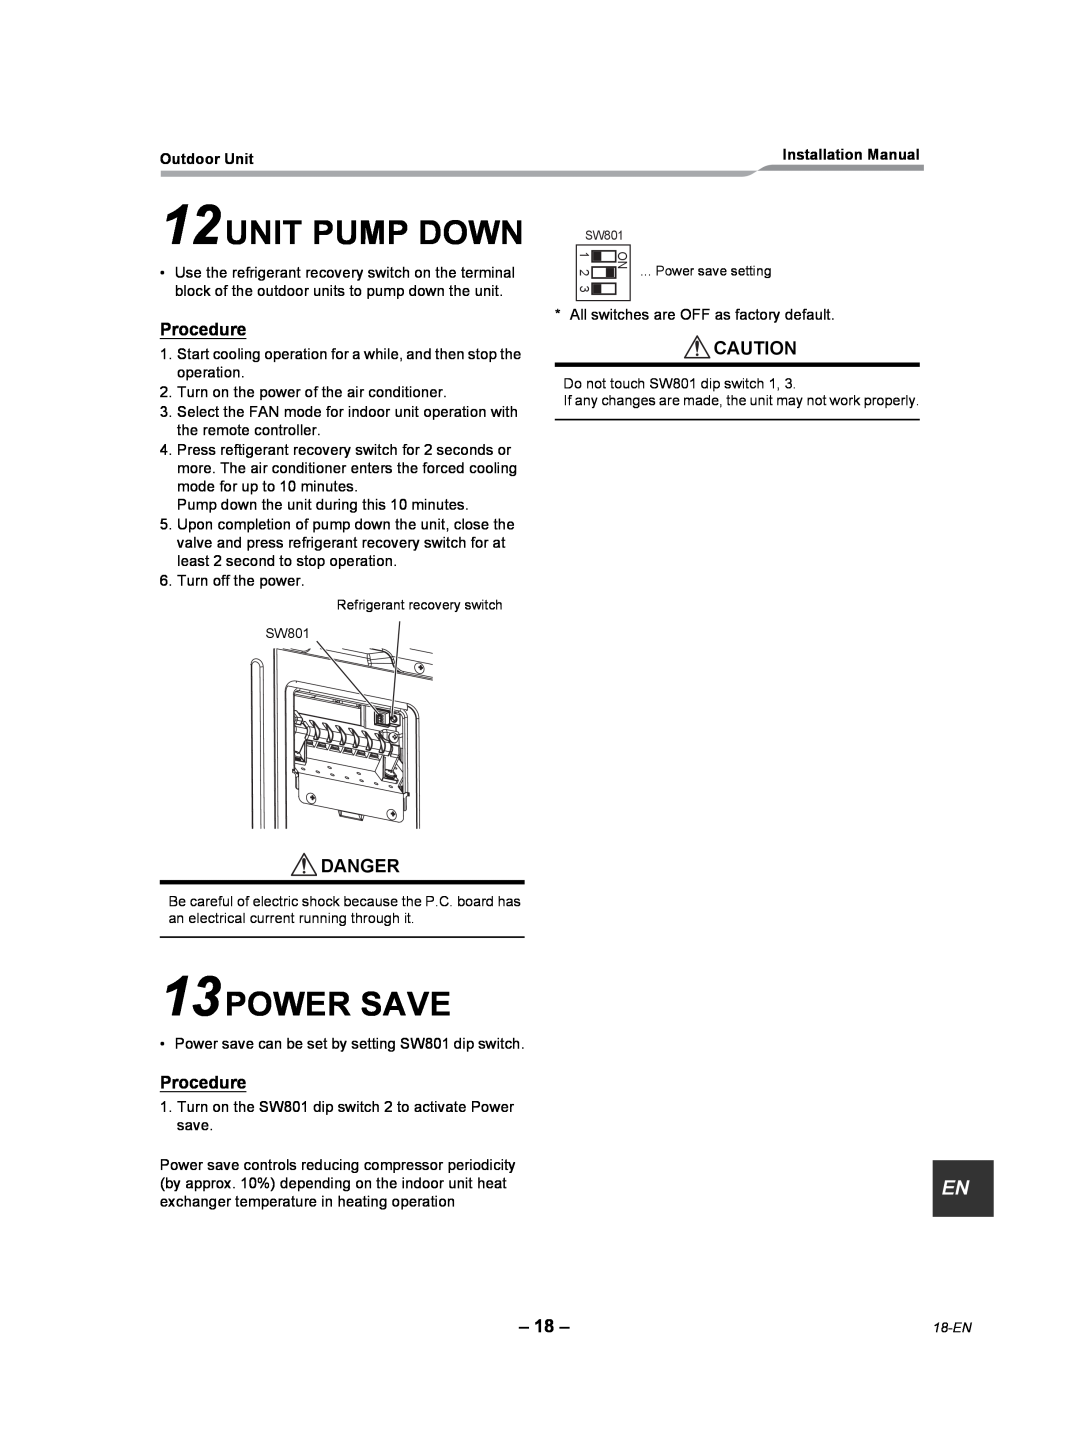 Toshiba RAV-SP180AT2-UL installation manual 12UNIT PUMP DOWN, 13POWER SAVE, Procedure 